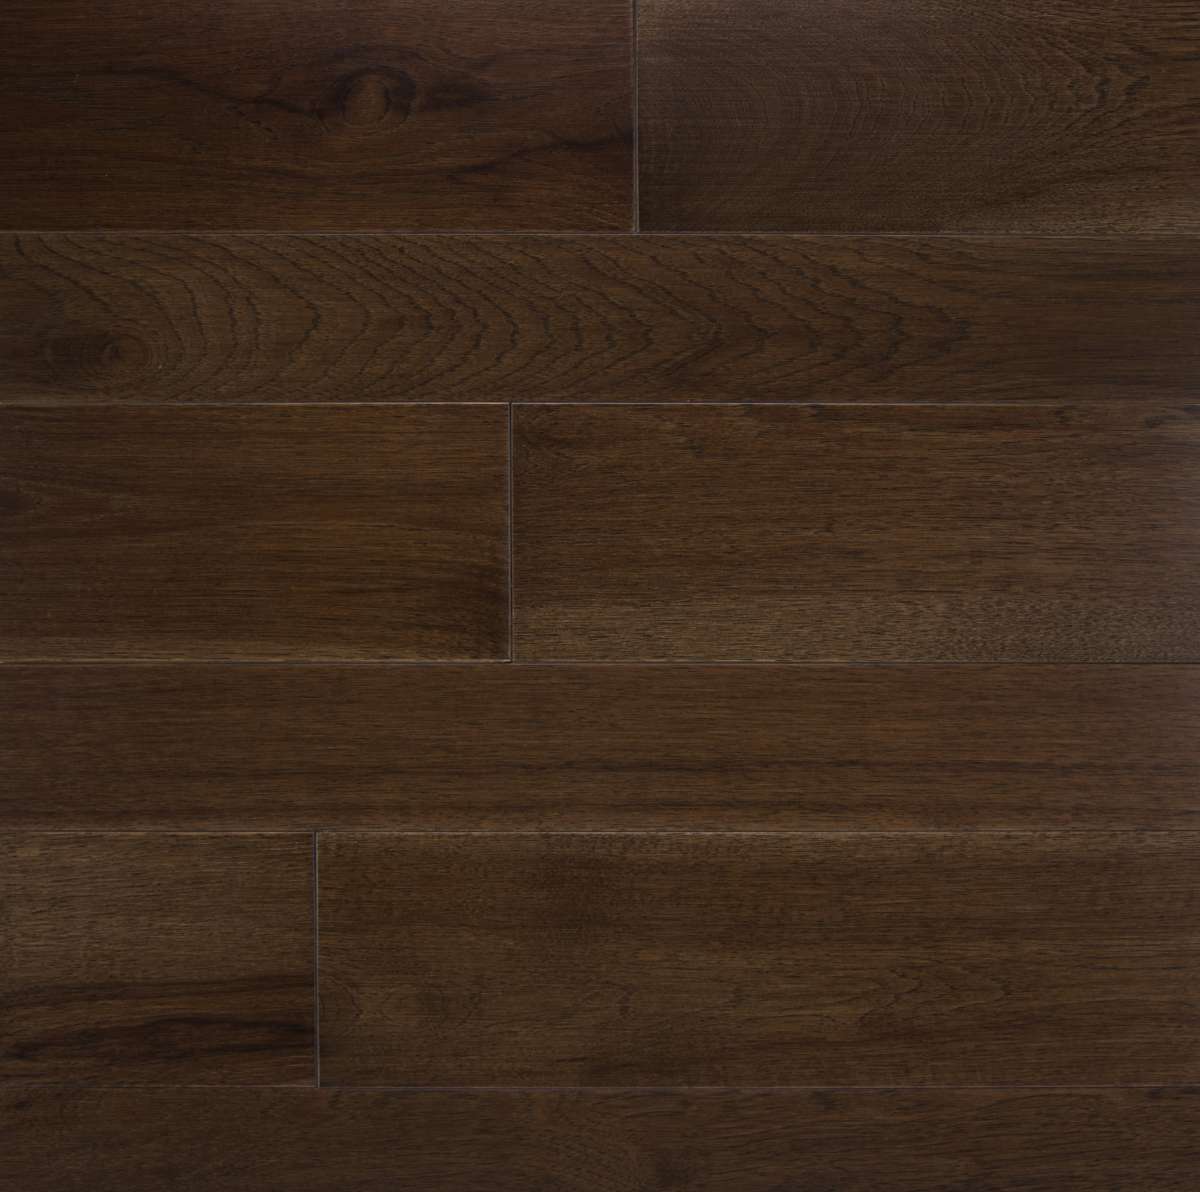 Somerset Hardwood Flooring, Somerset Hardwood Flooring Warranty